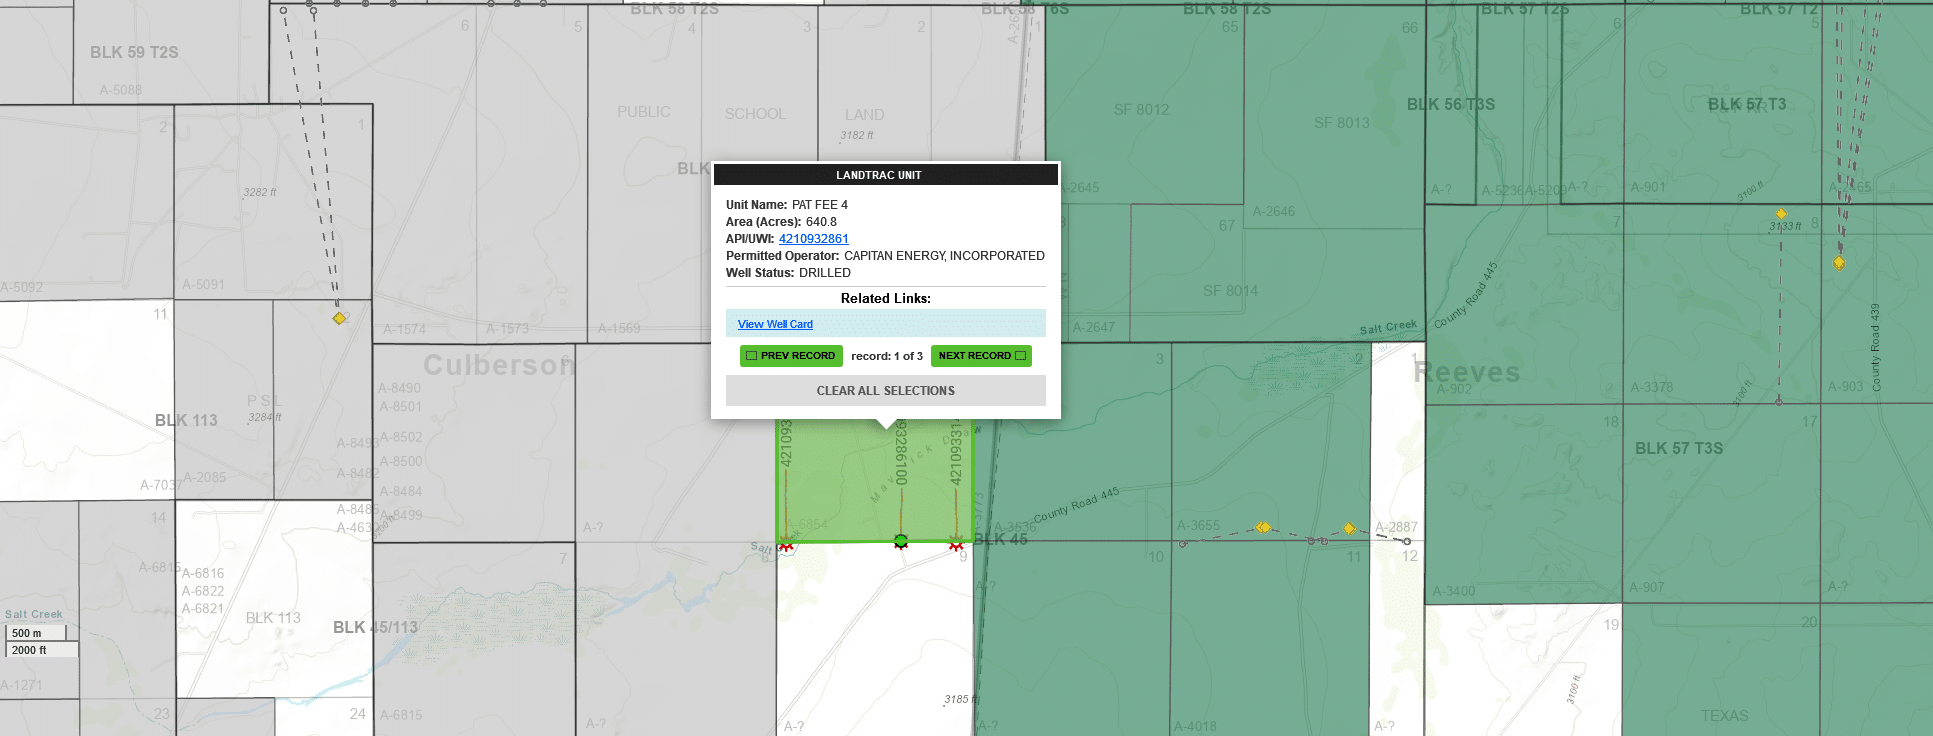 DI Map - Pat Fee 4 Unit 640.8 acres